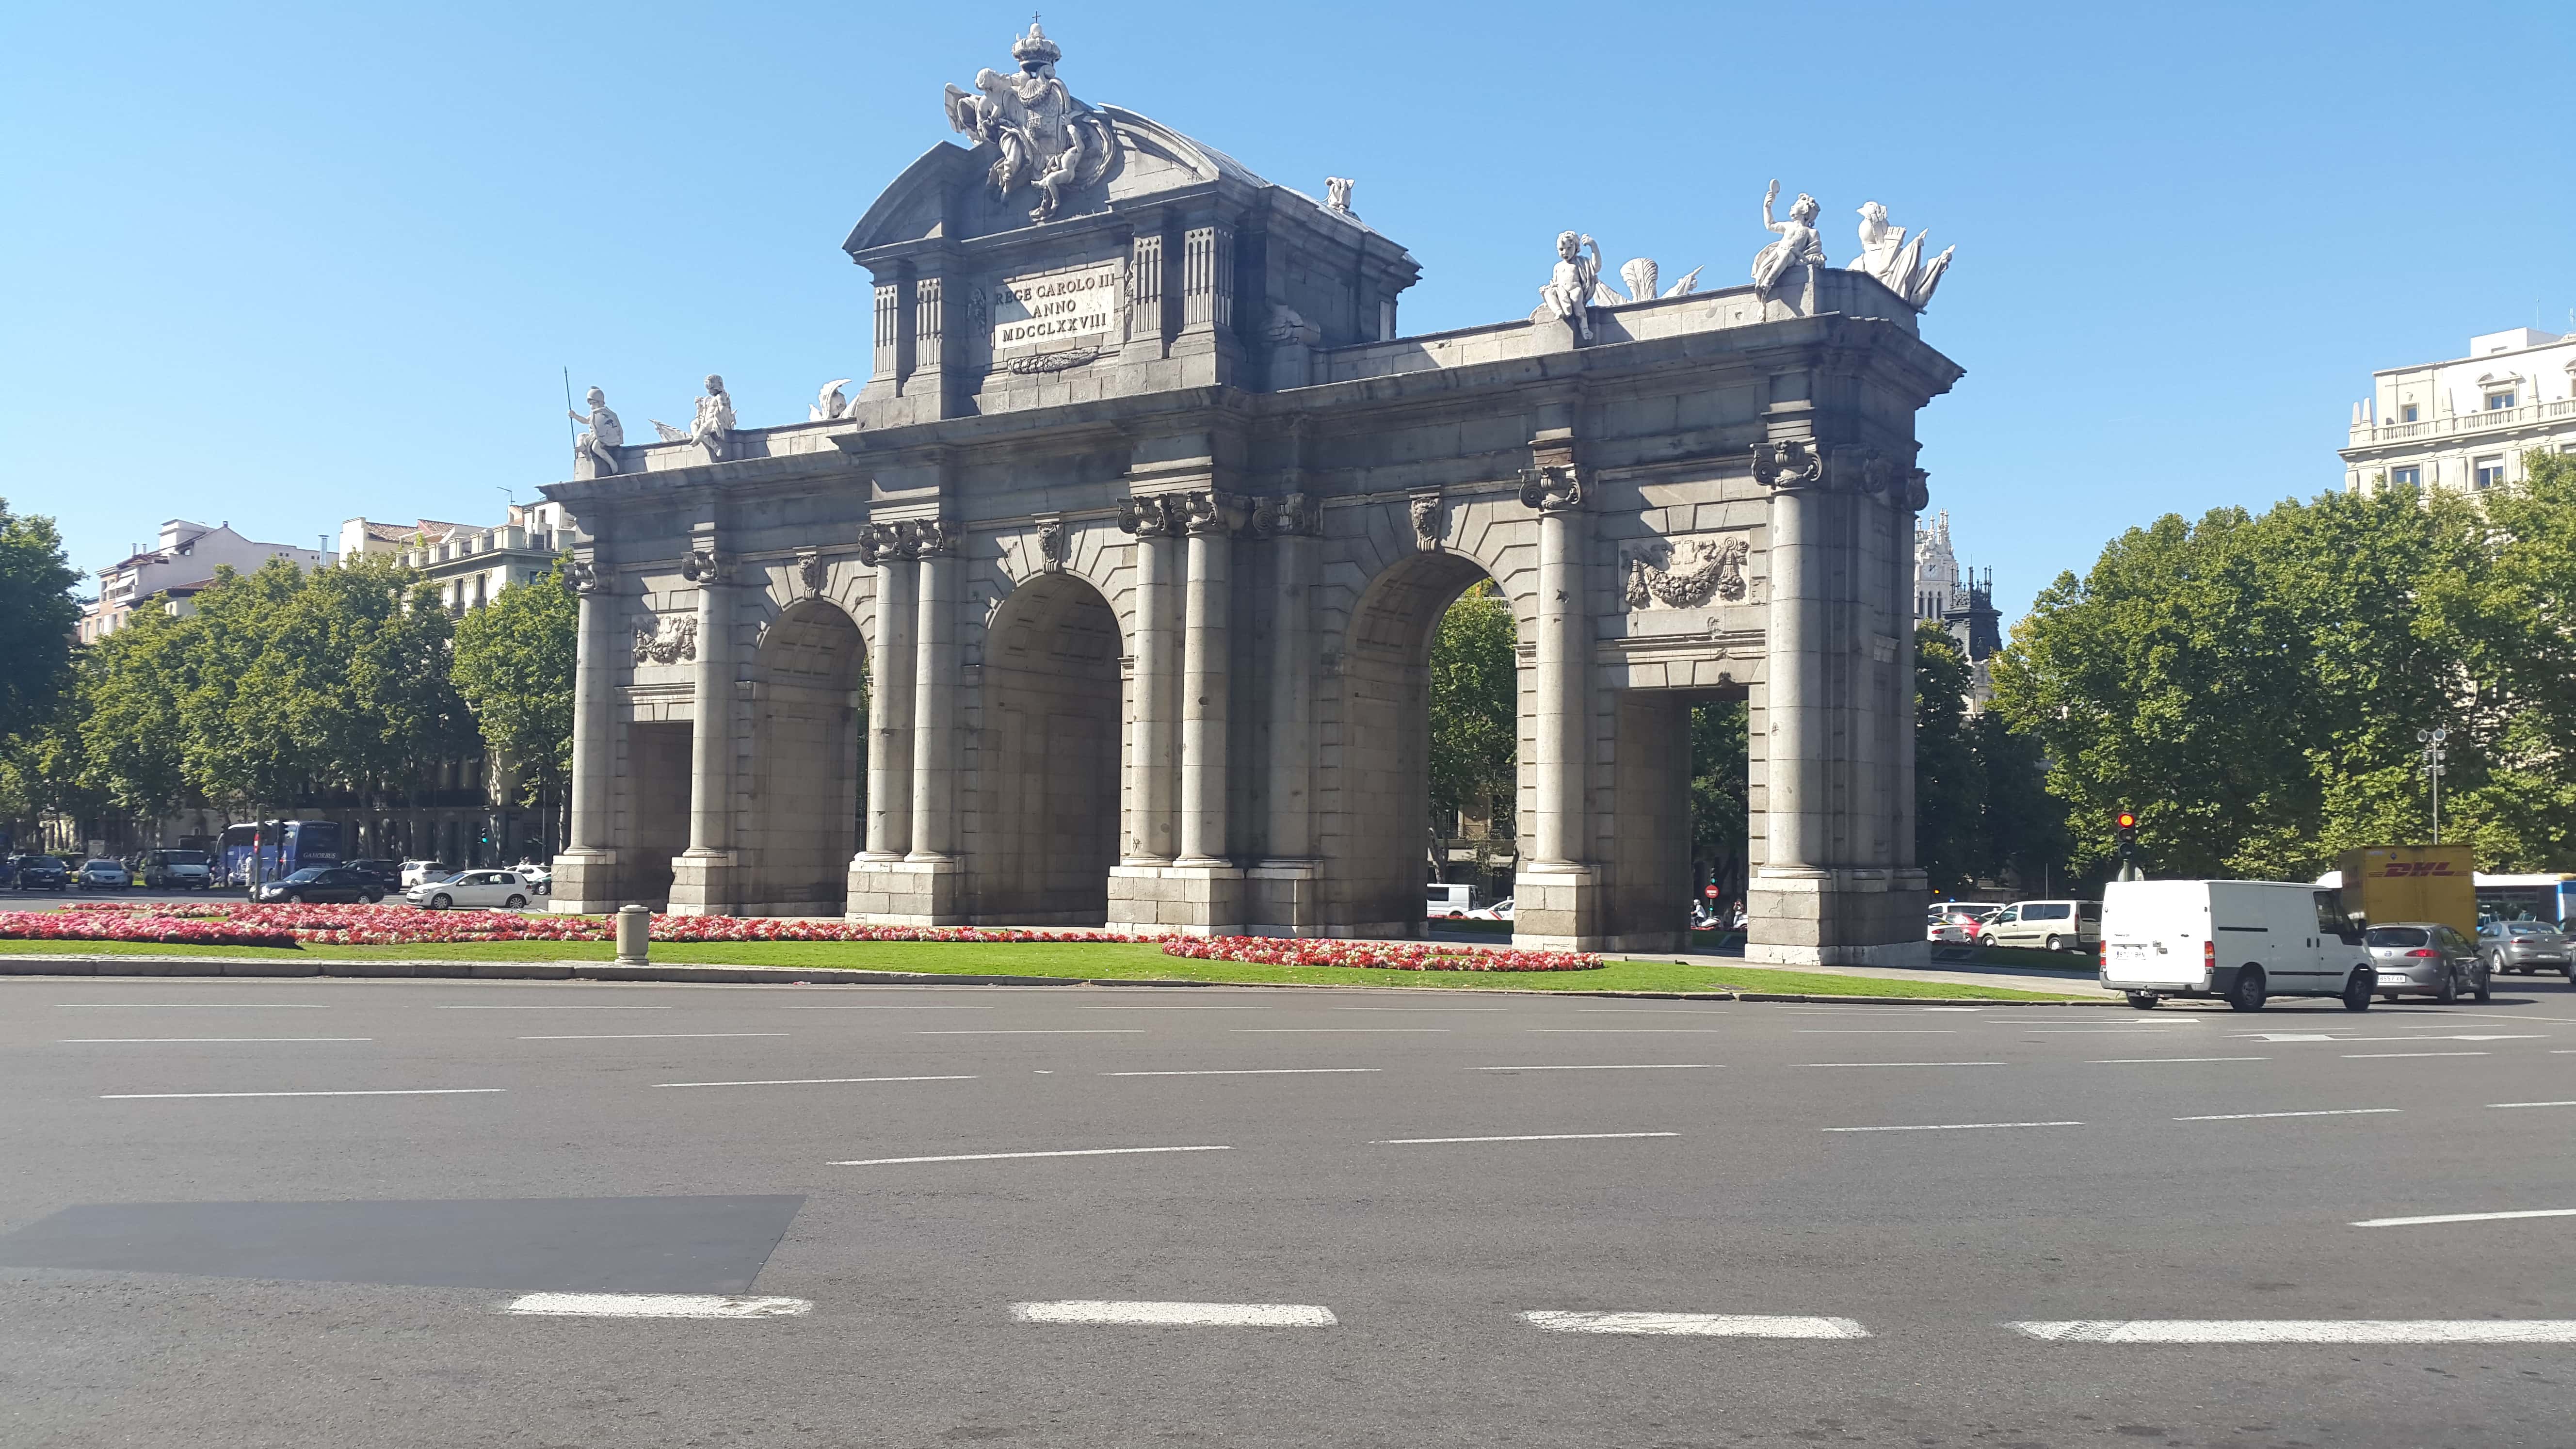 The Alcala Gate/Puerta de Alcala